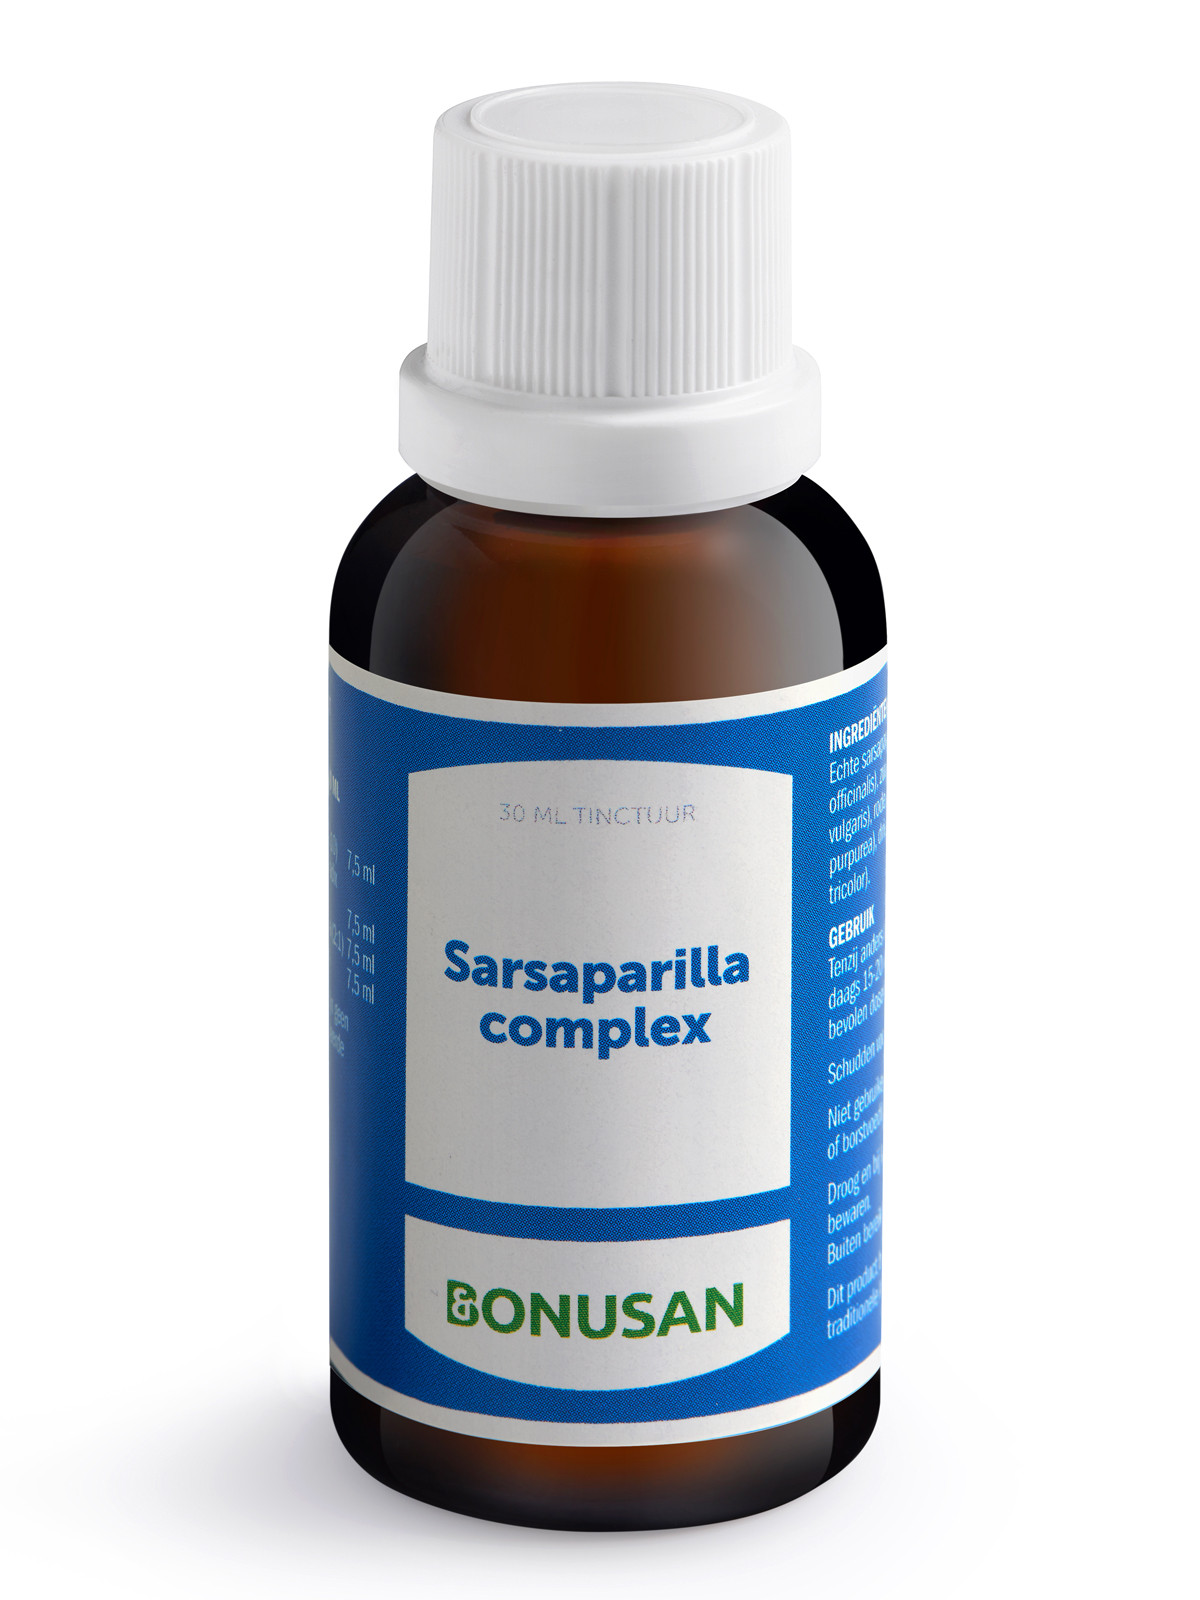 Bonusan - Sarsaparilla complex